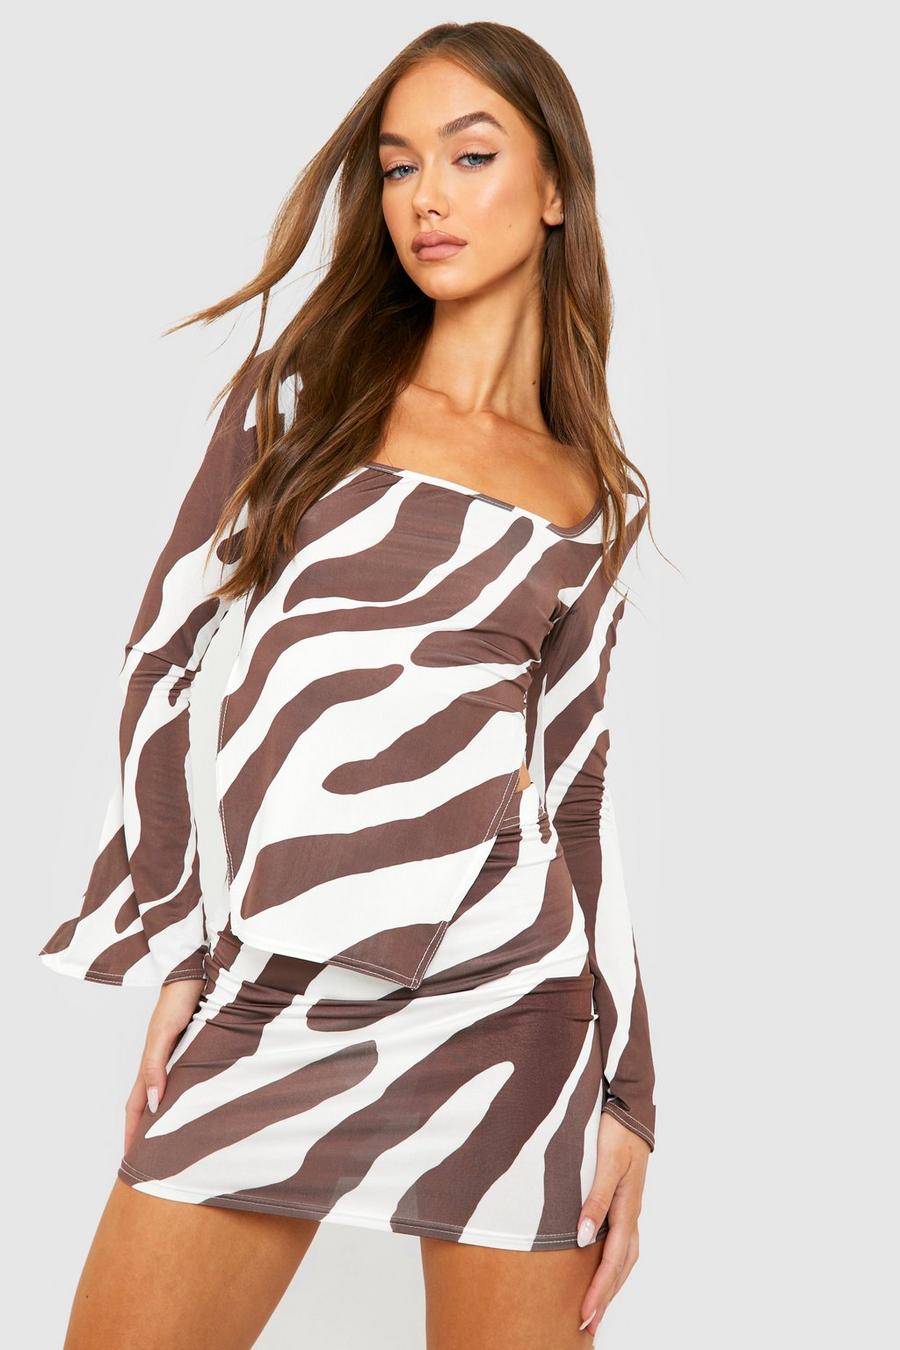 Chocolate marron Zebra Print Puff Sleeve Top